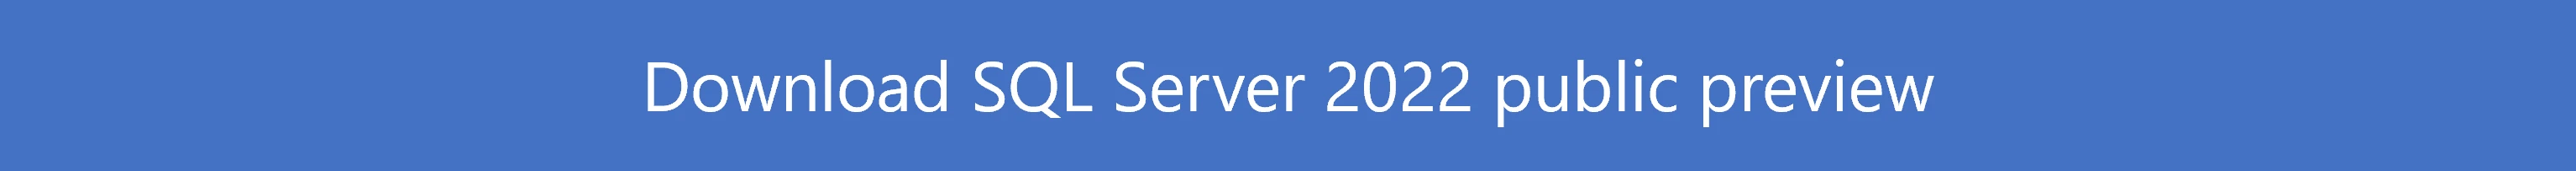 Button to download SQL Server 2022, public preview.